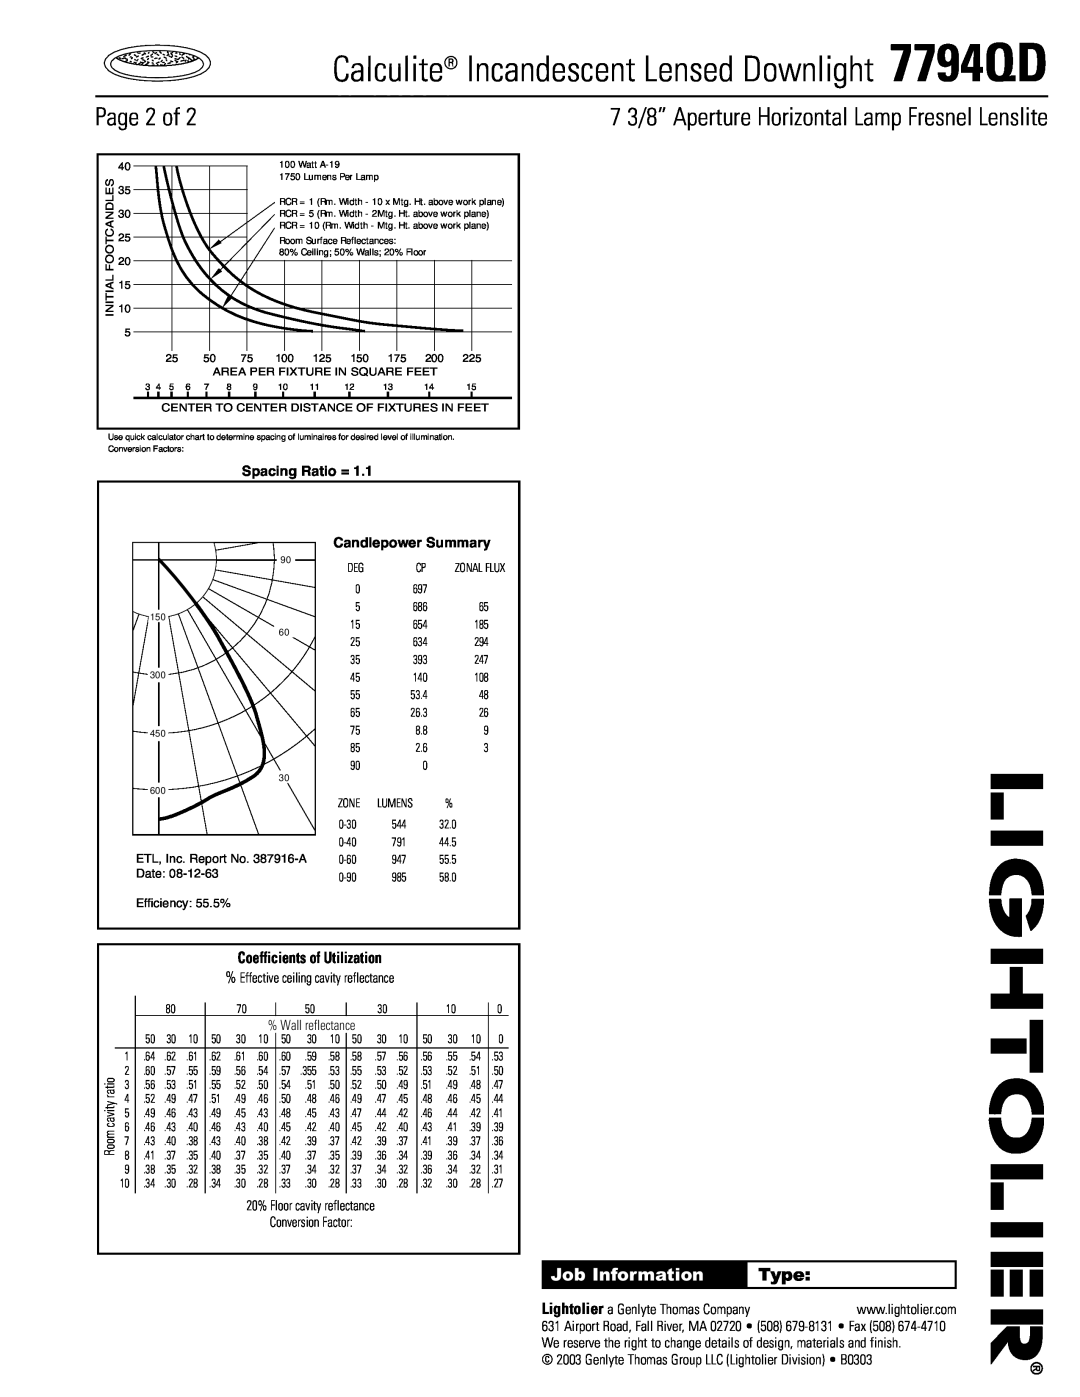 Lightolier Calculite, Incandescent Lensed Downlight 7794QD, Page 2 of, 7 3/8” Aperture Horizontal Lamp Fresnel Lenslite 